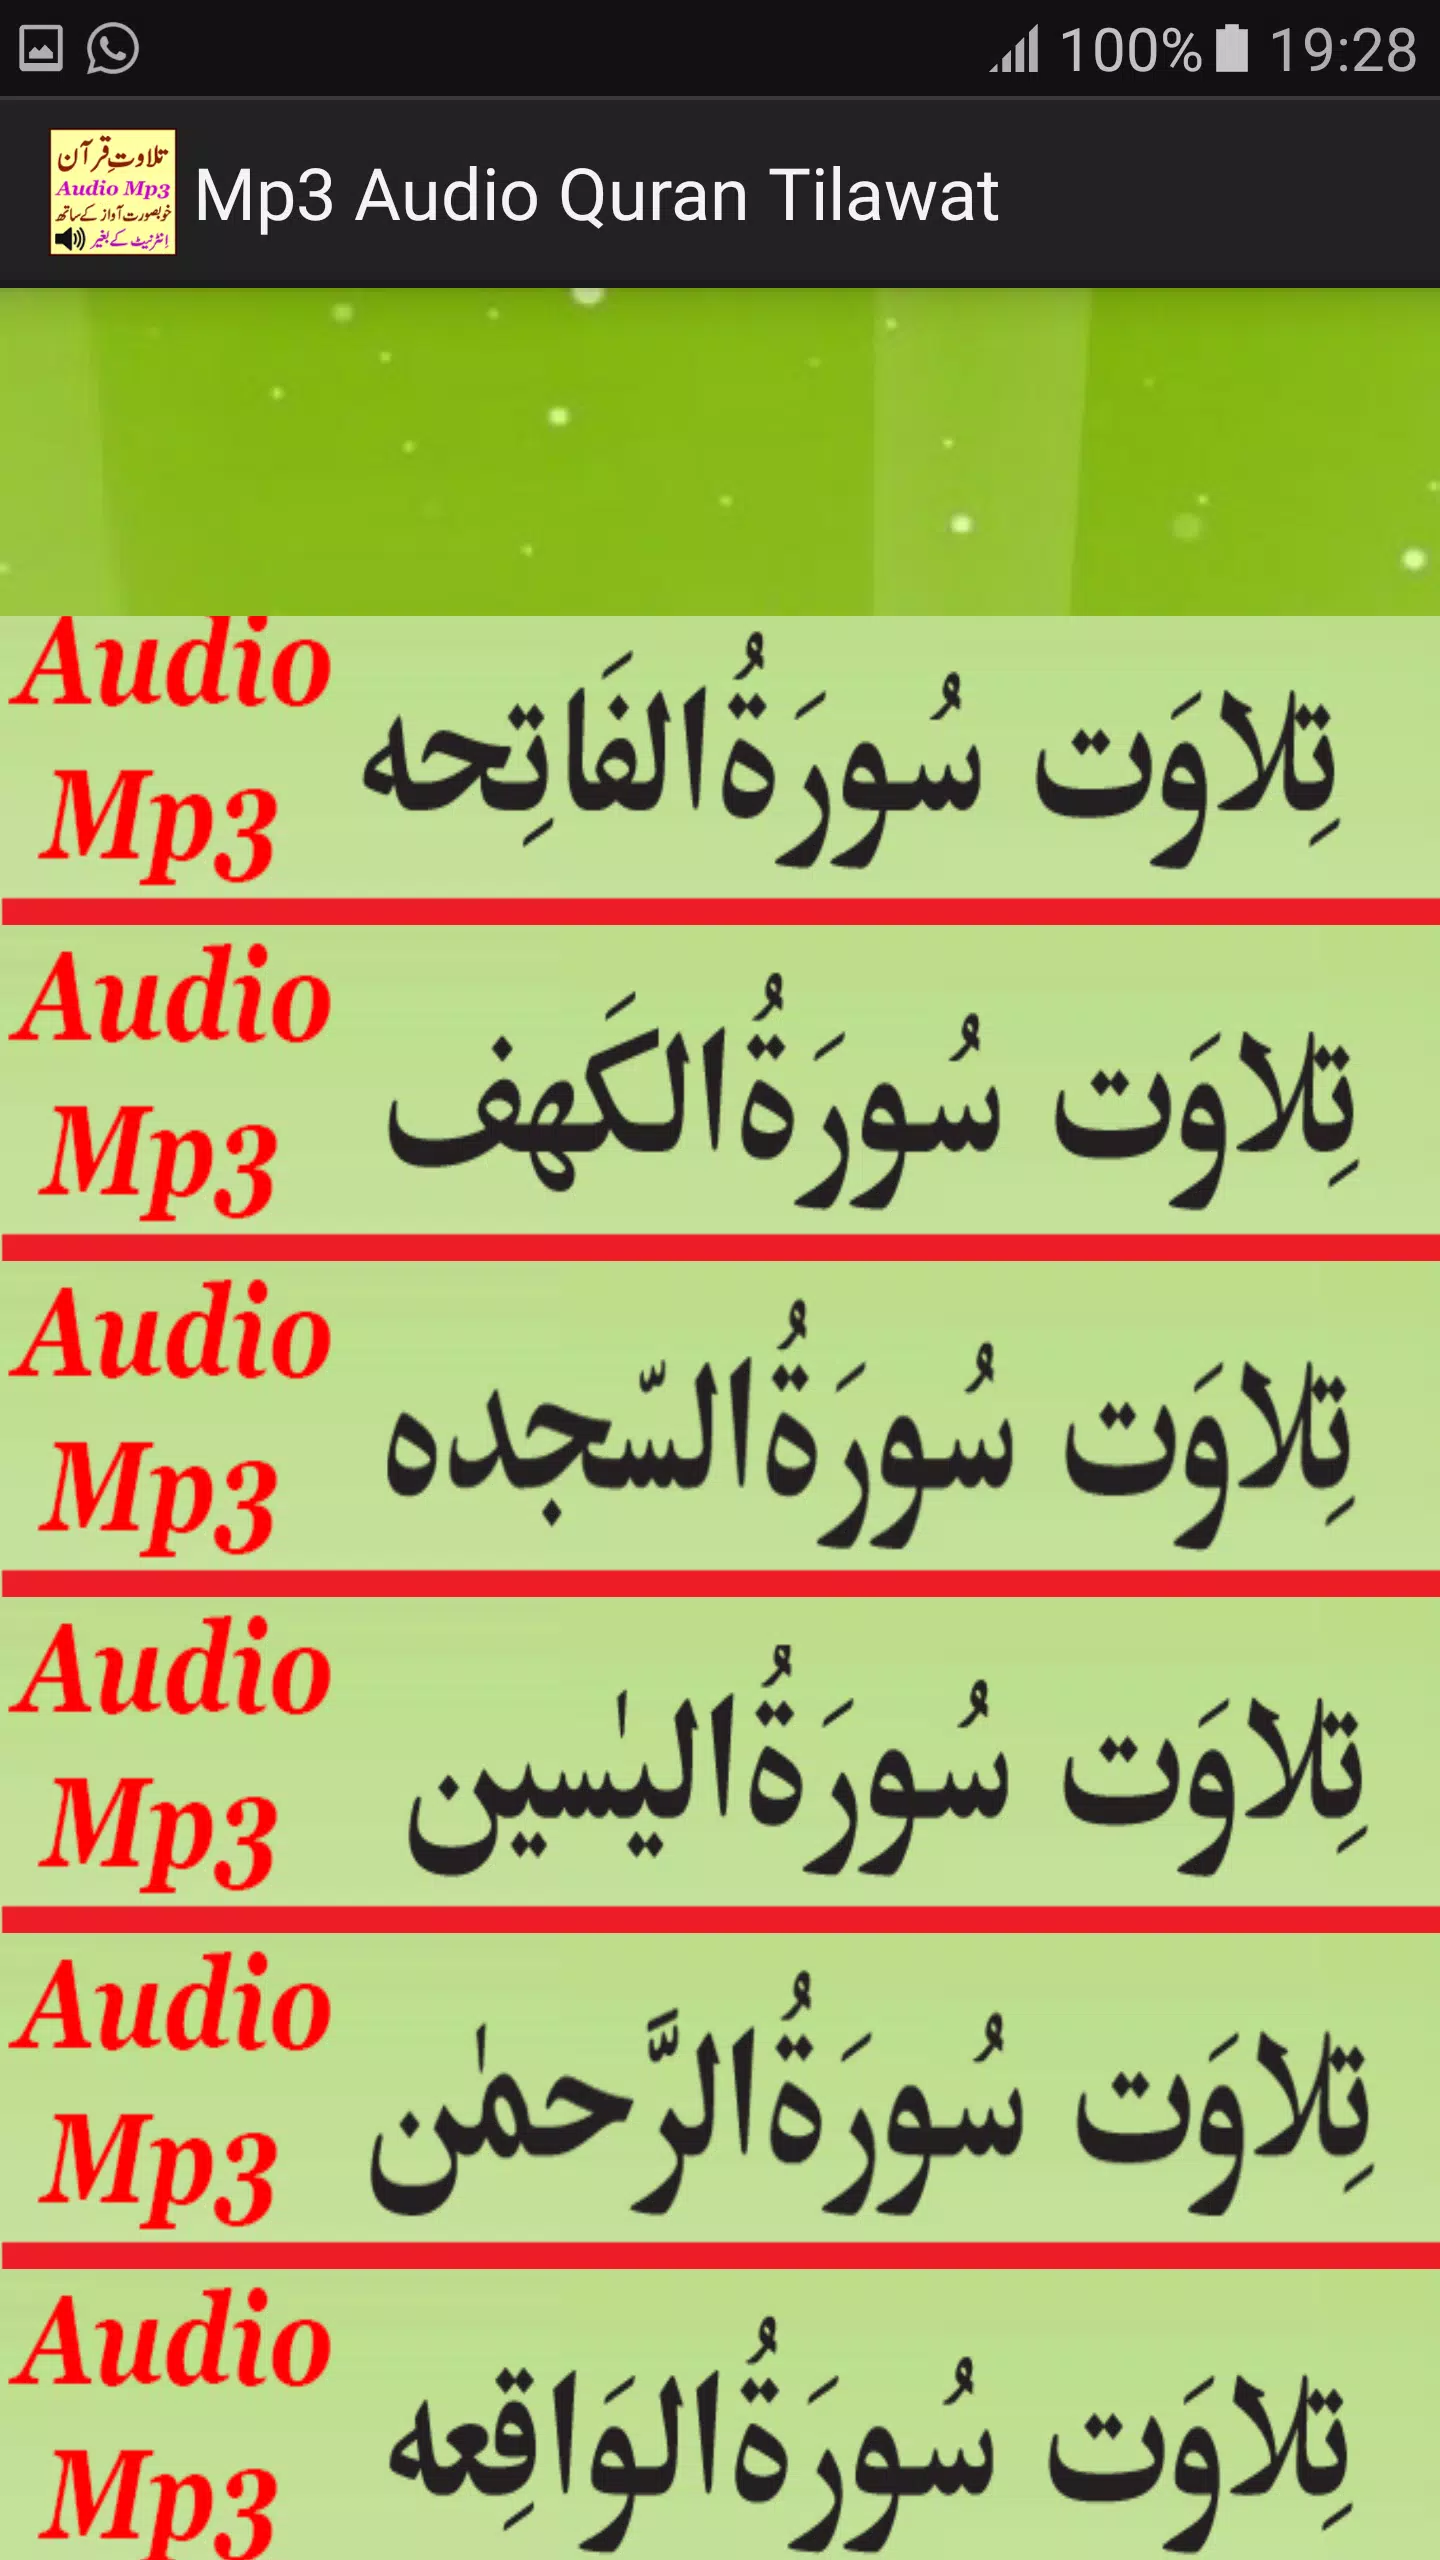 Mp3 Audio Quran Tilawat APK for Android Download